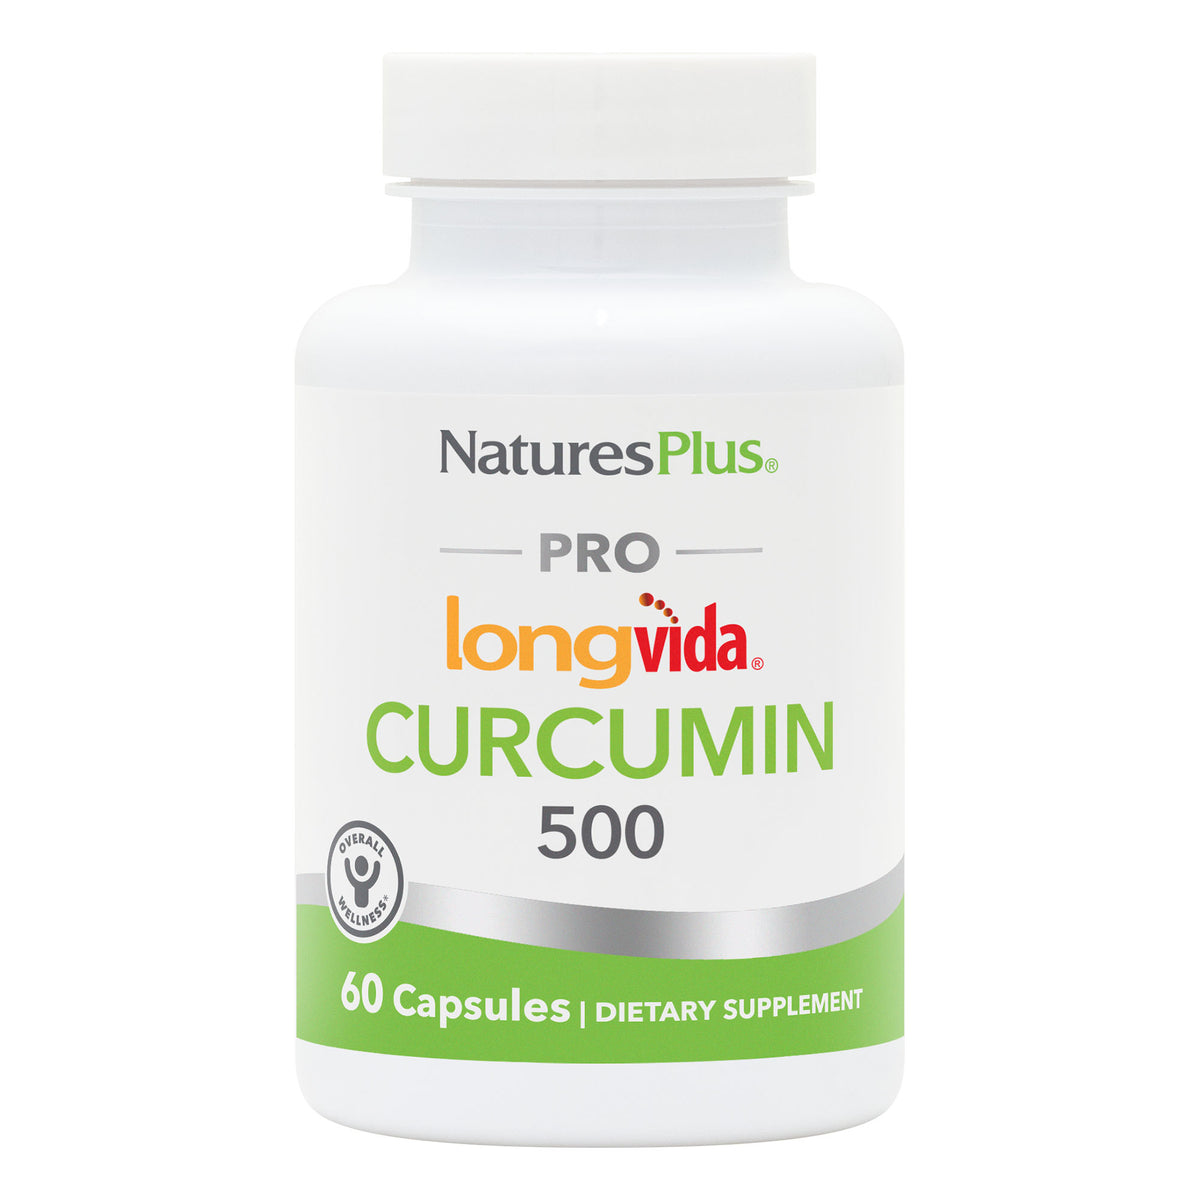 product image of NaturesPlus PRO Curcumin Longvida® 500 MG Capsules containing 60 Count